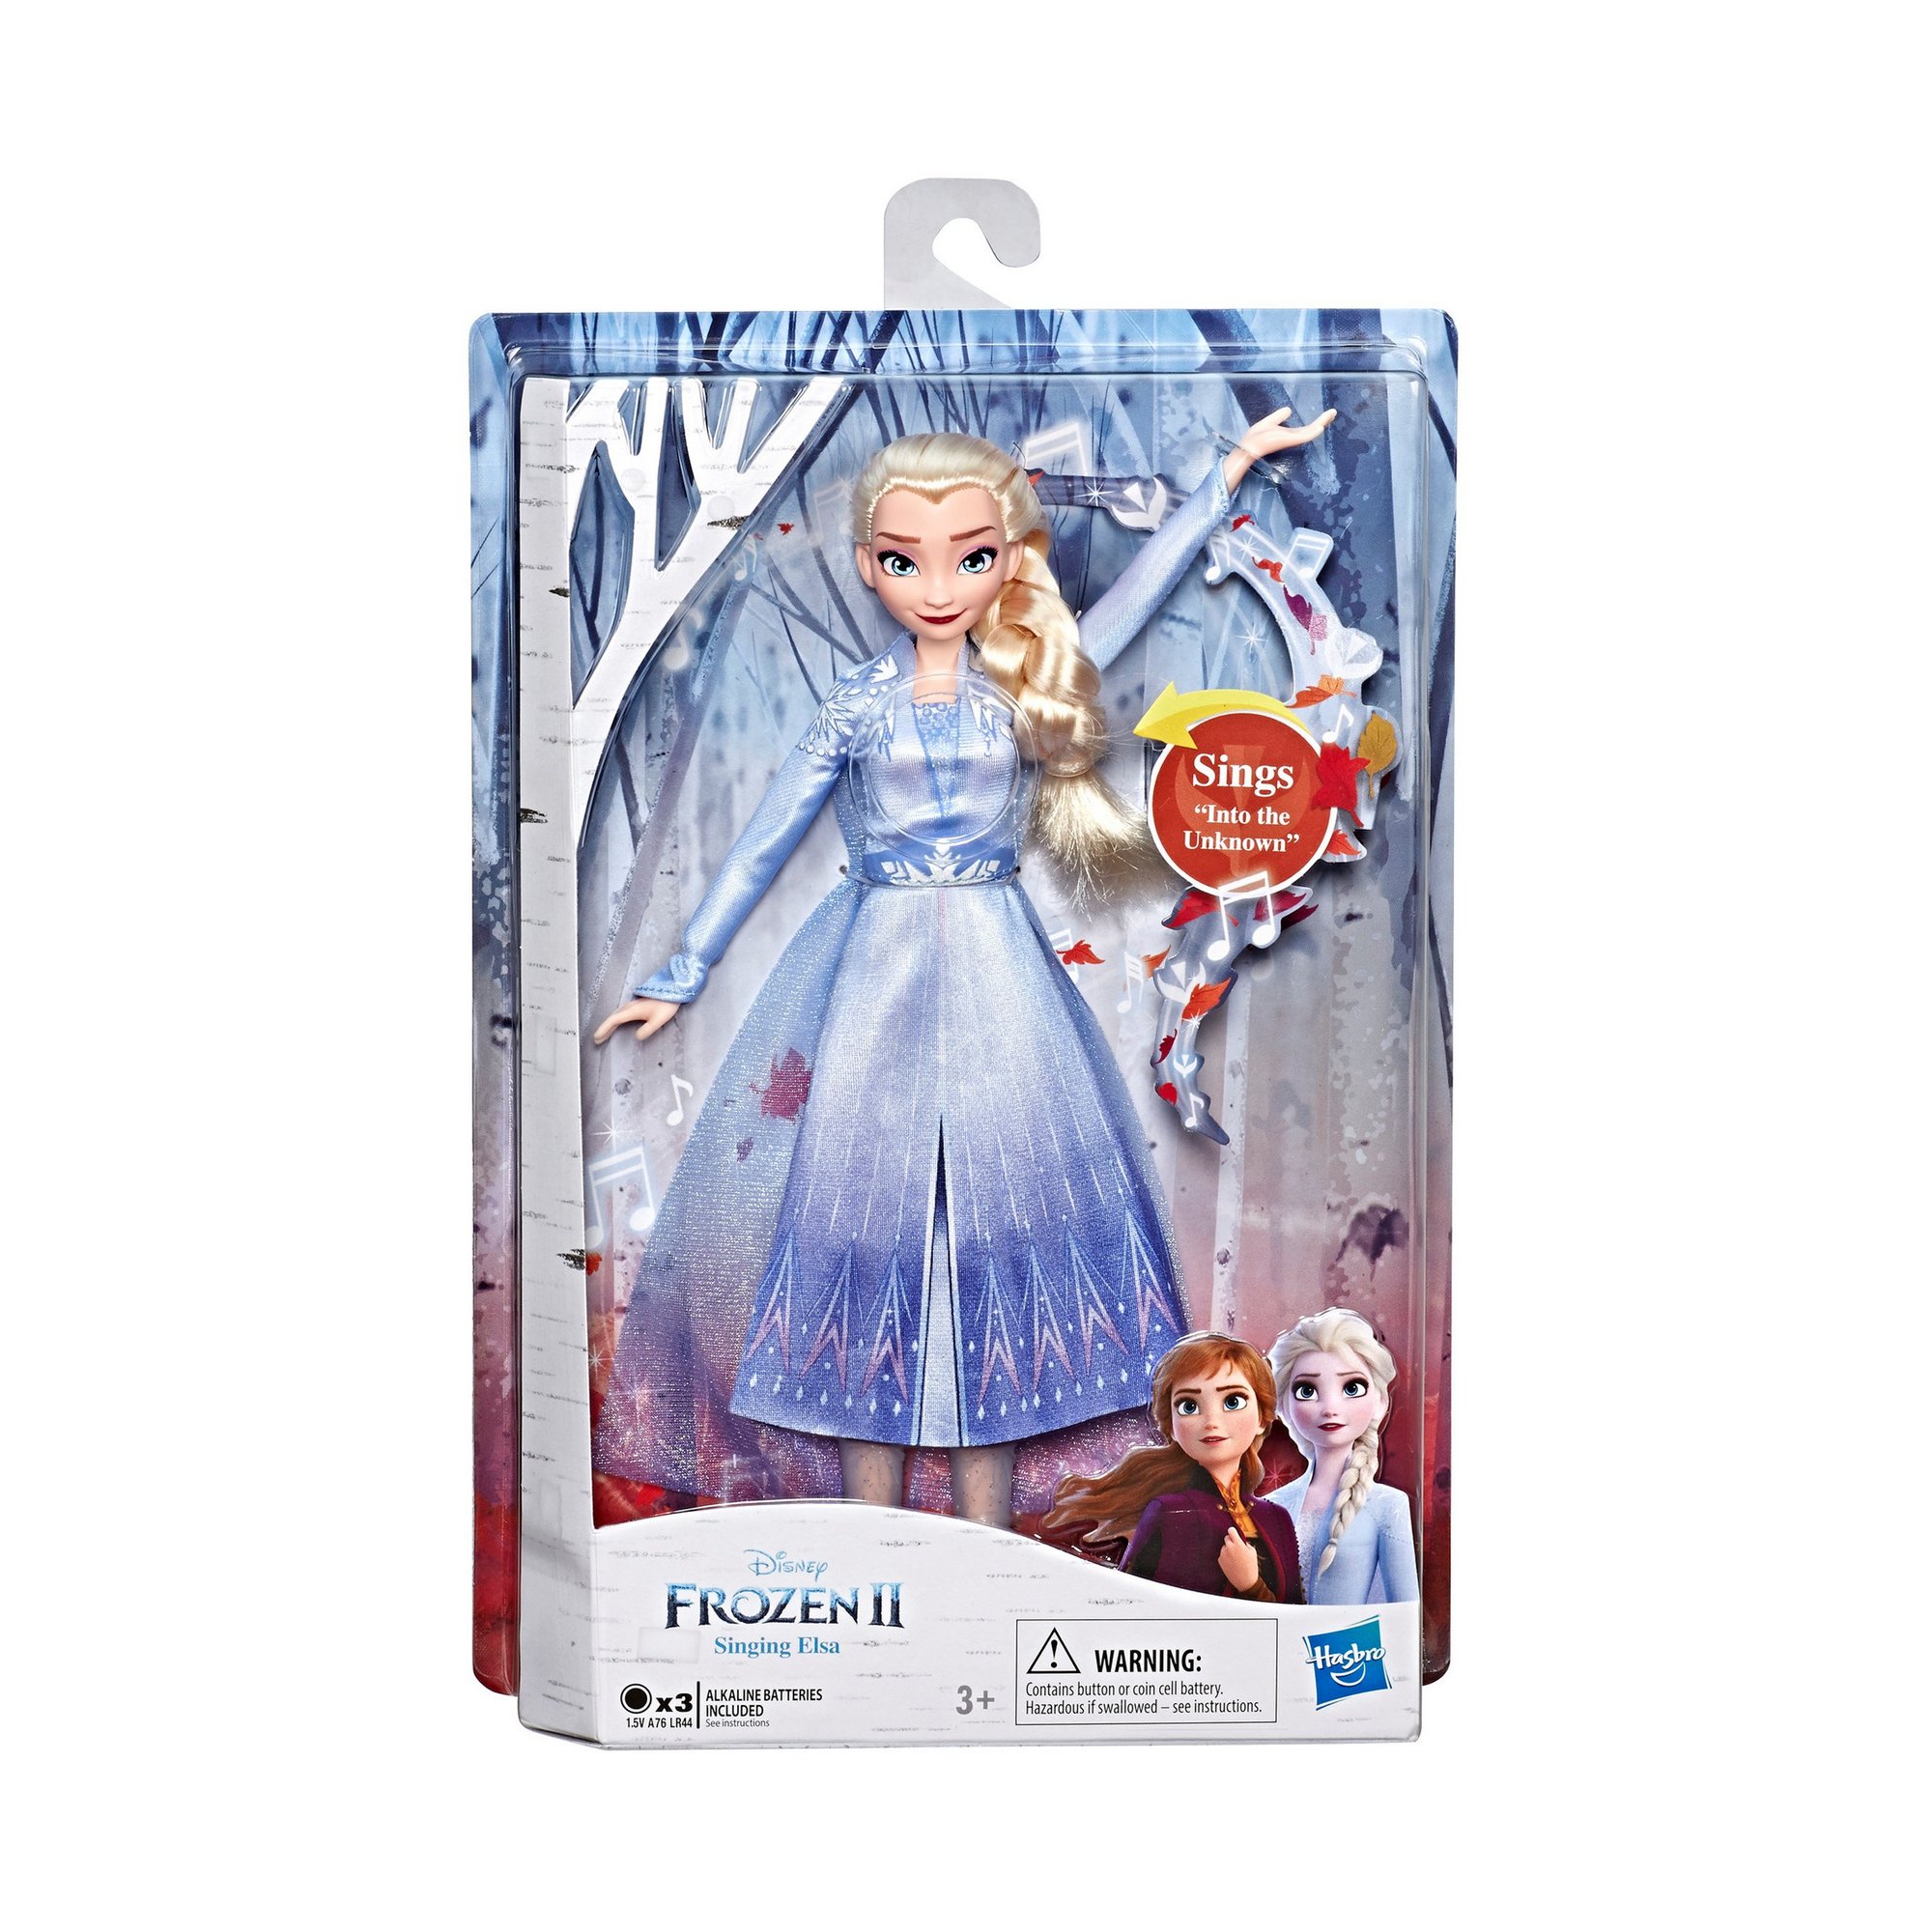 Disney Princess Frozen 2 Singing Elsa Doll